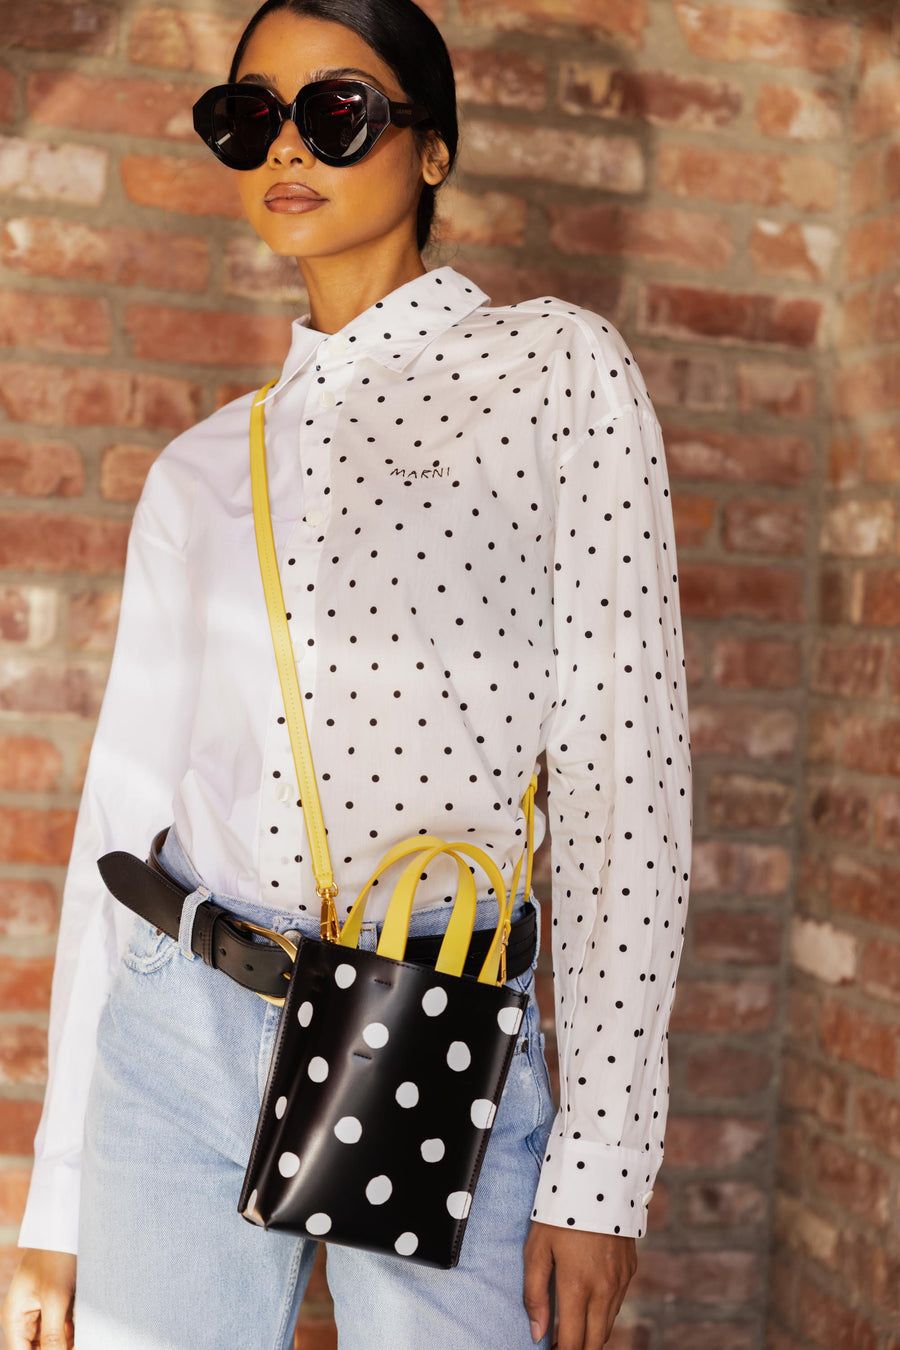 Marni Button Up Shirt in White w/ Black Polka Dots